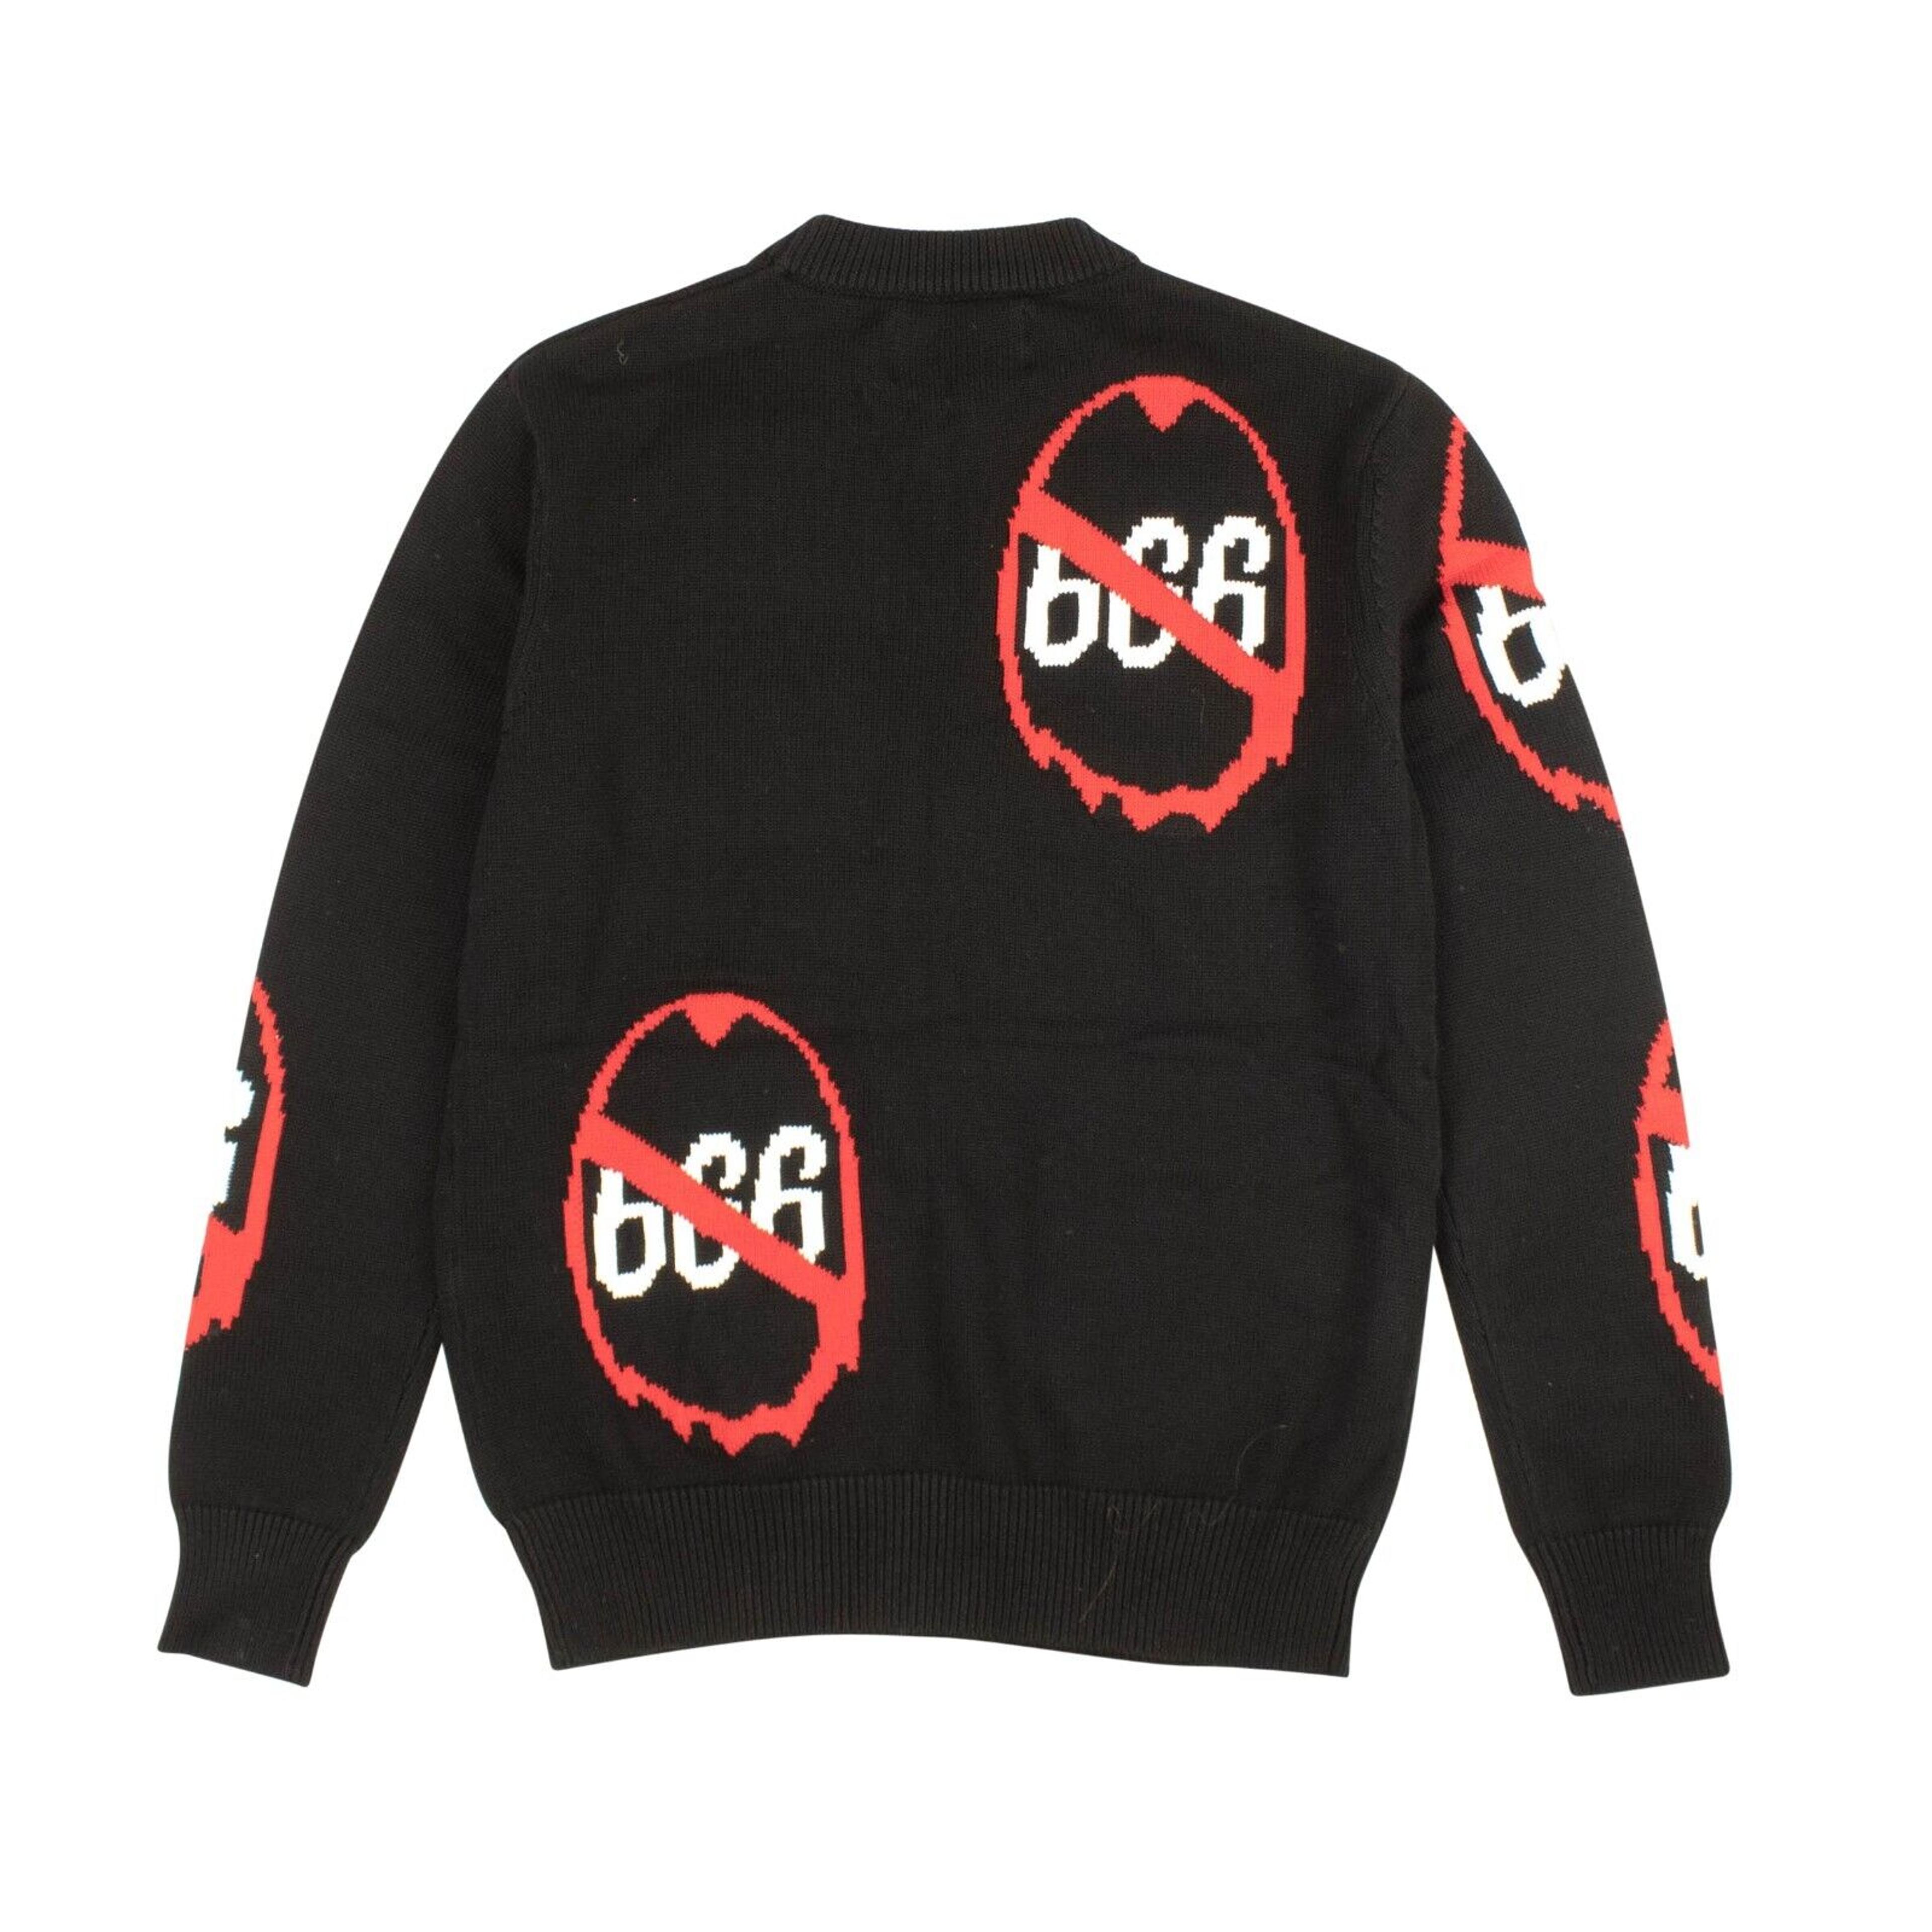 Alternate View 2 of Black Anti 666 Knit Crewneck Sweater